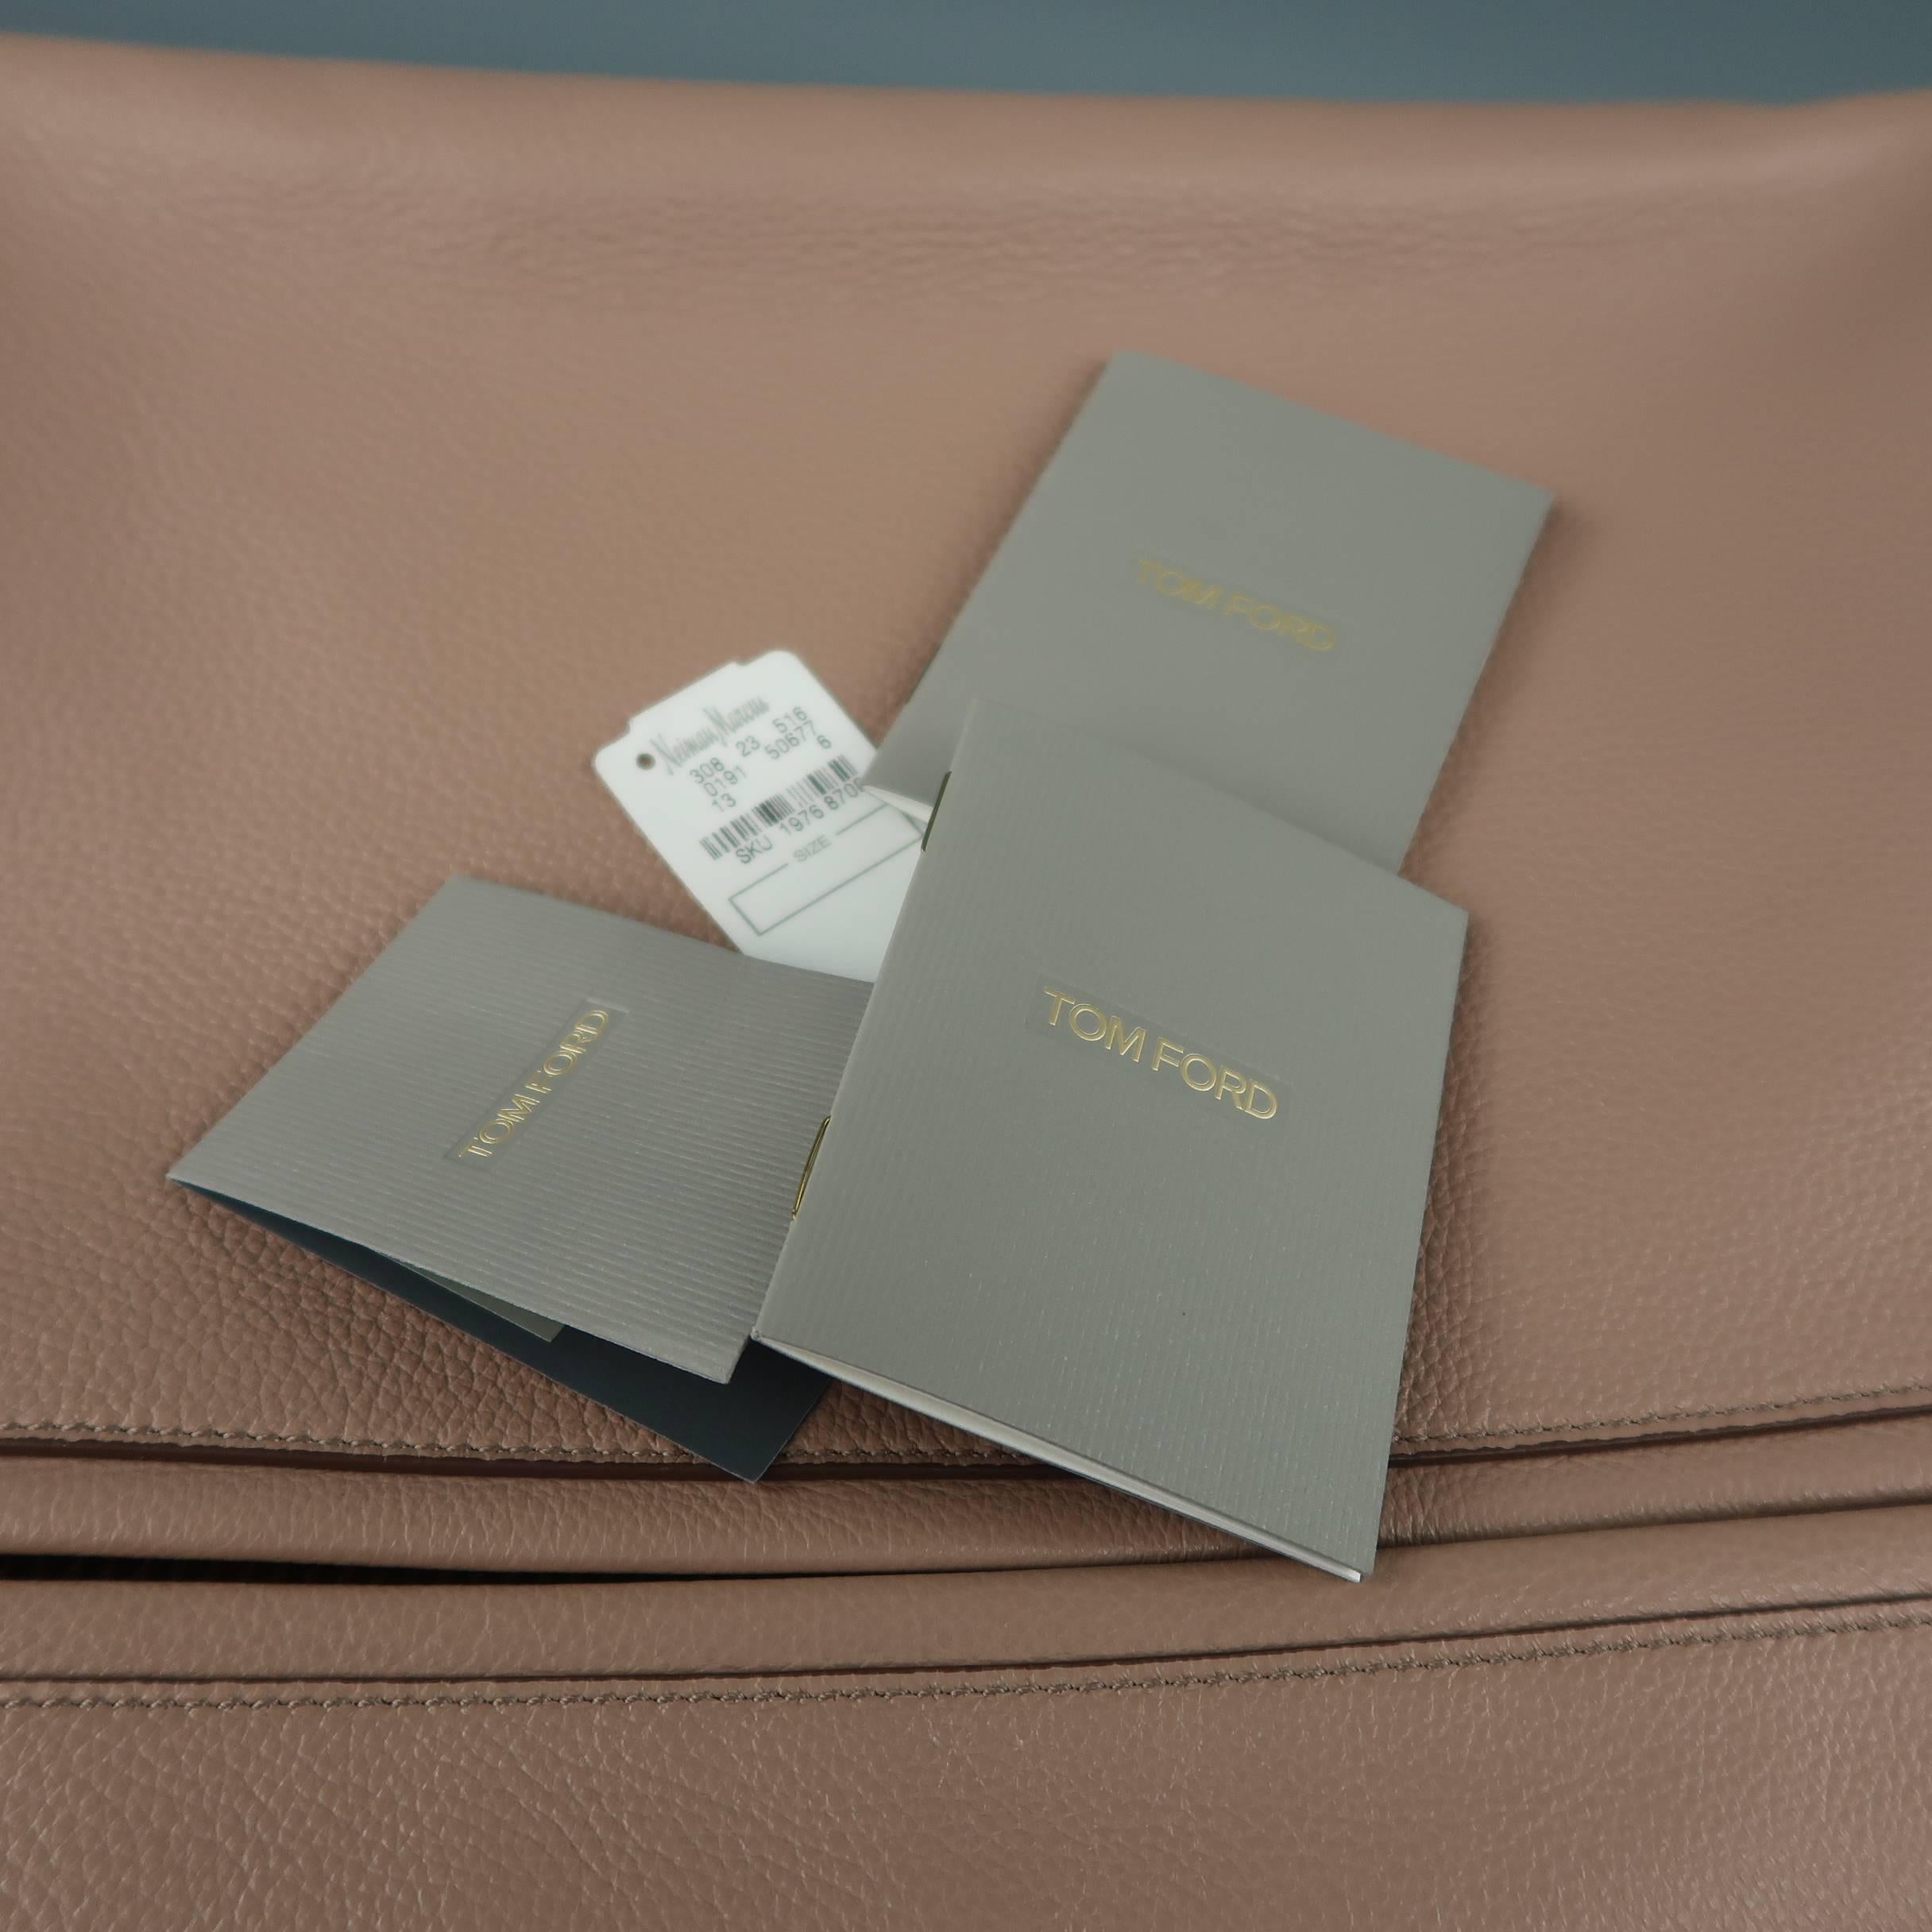 Tom Ford Handbag - Alix - Nude Textured Leather Gold Padlock Clutch Bag 7